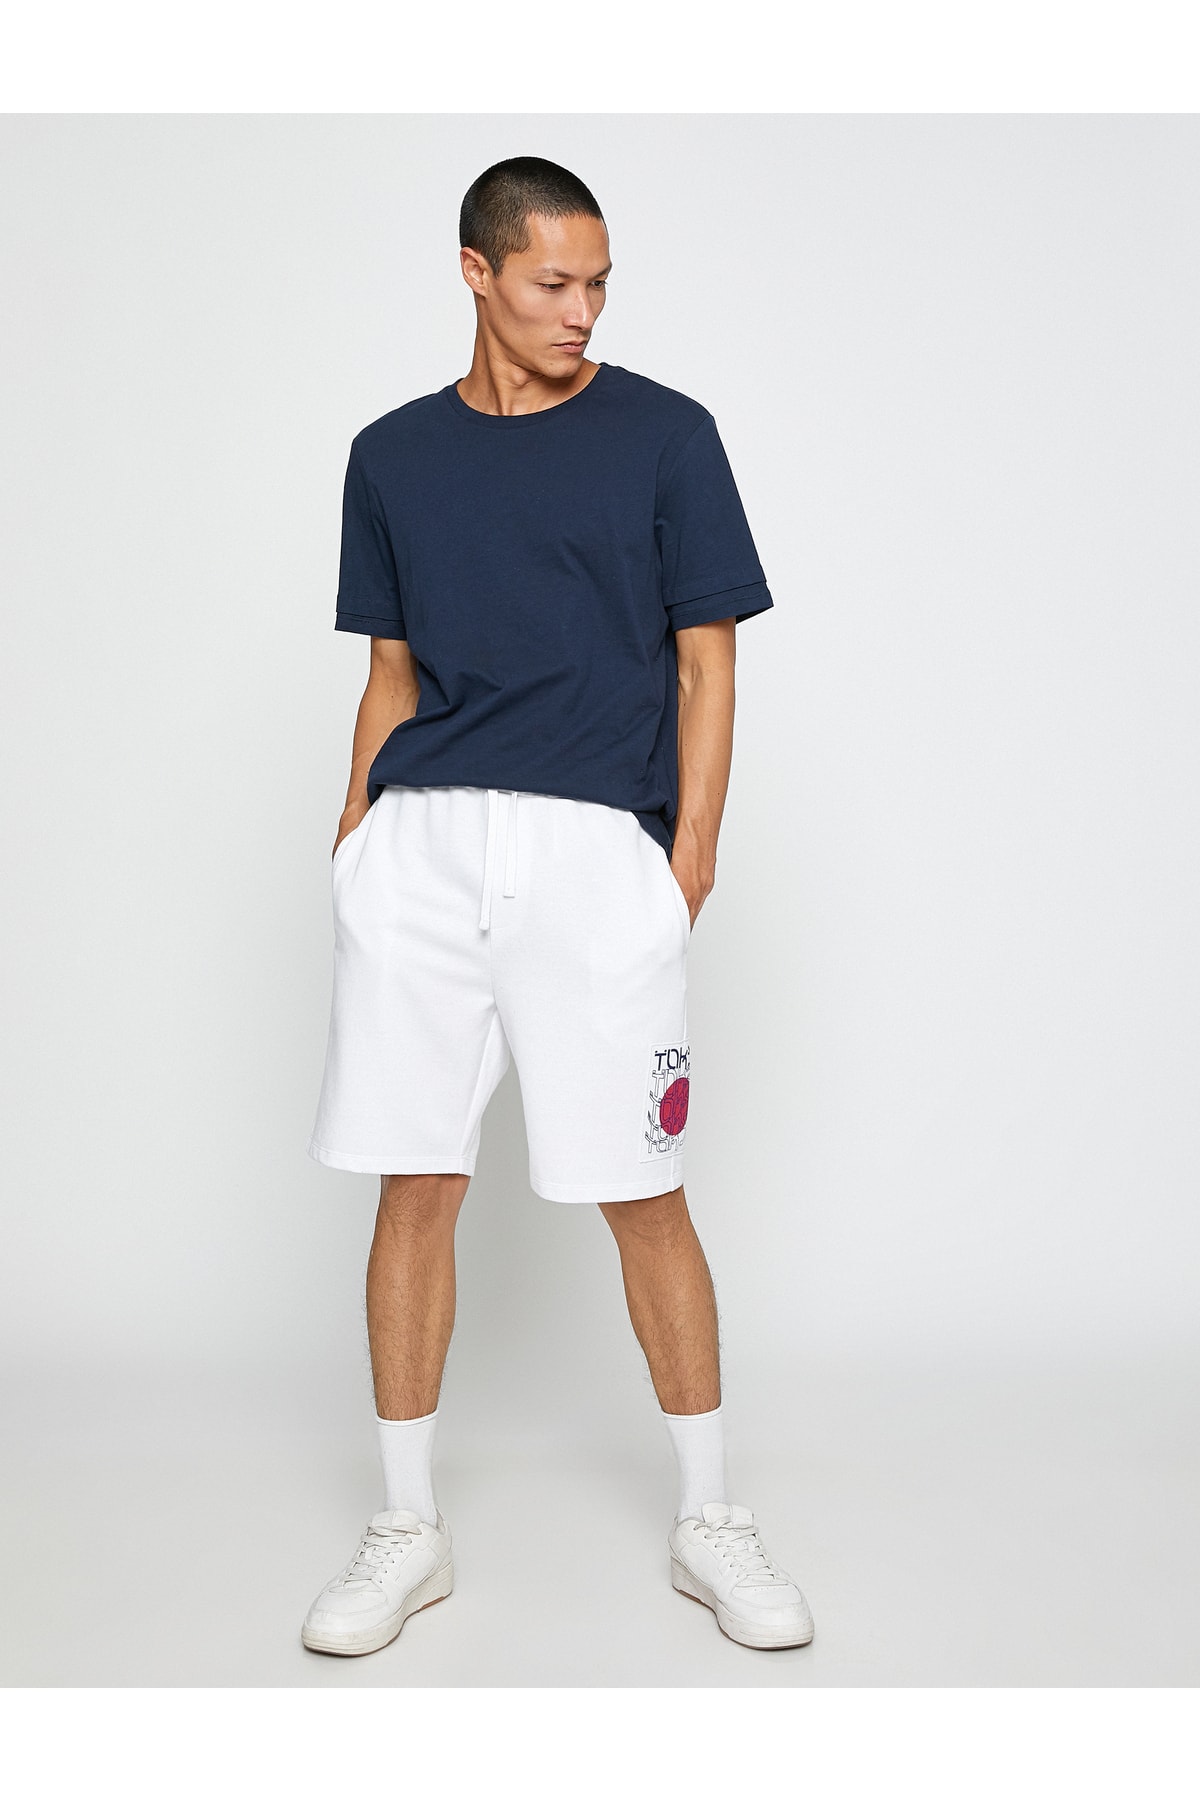 Koton Basic Sports Shorts with Far East Print, Waist Lace, Pocket